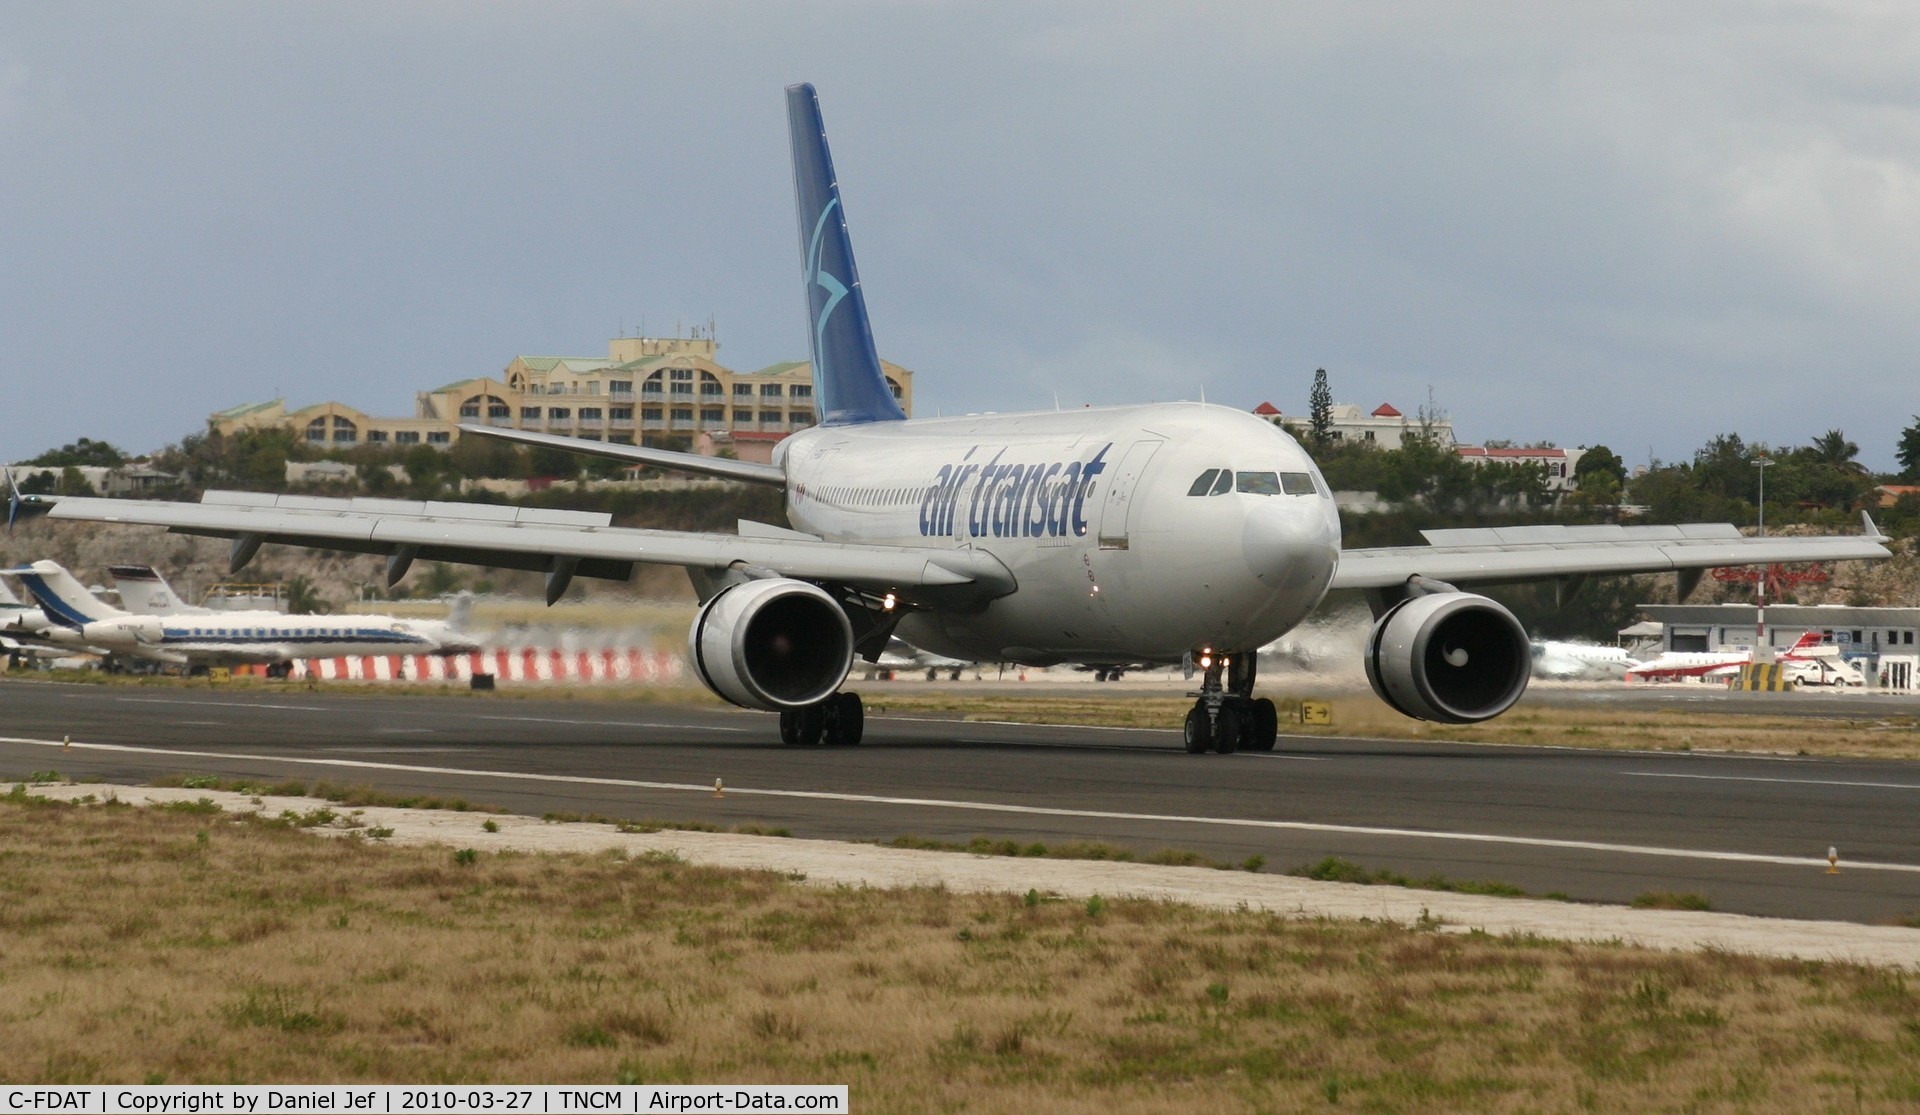 C-FDAT, 1992 Airbus A310-308 C/N 658, Air transat just landed at TNCM runway 10